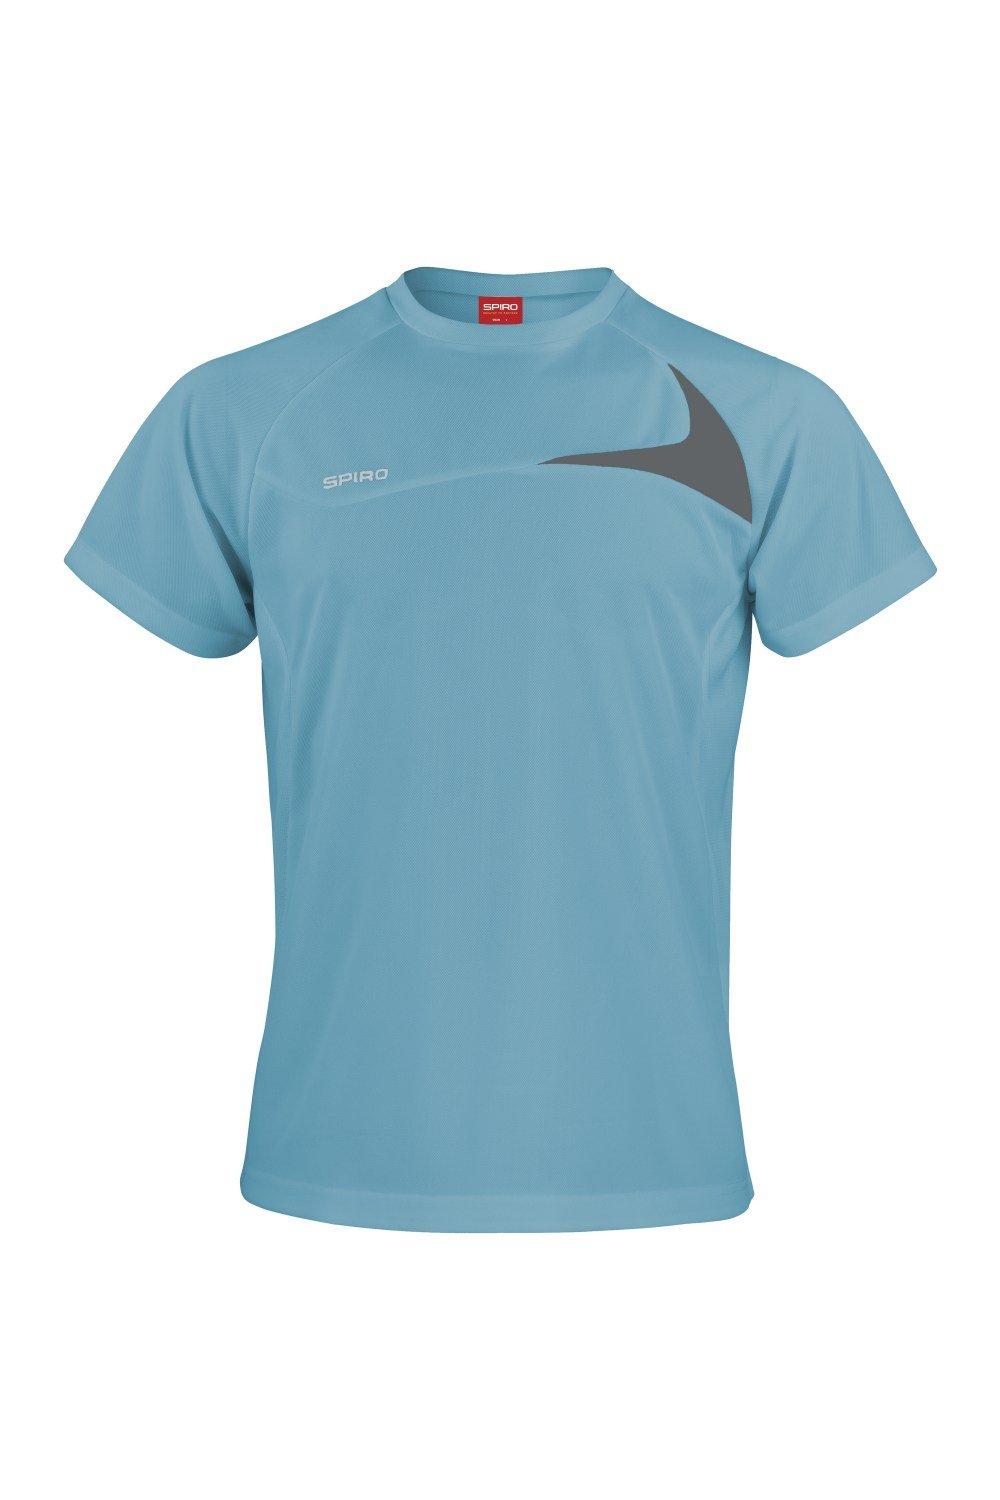 Спортивная рубашка Dash Performance для тренировок Spiro, синий леггинсы dry cool redmax цвет thyme